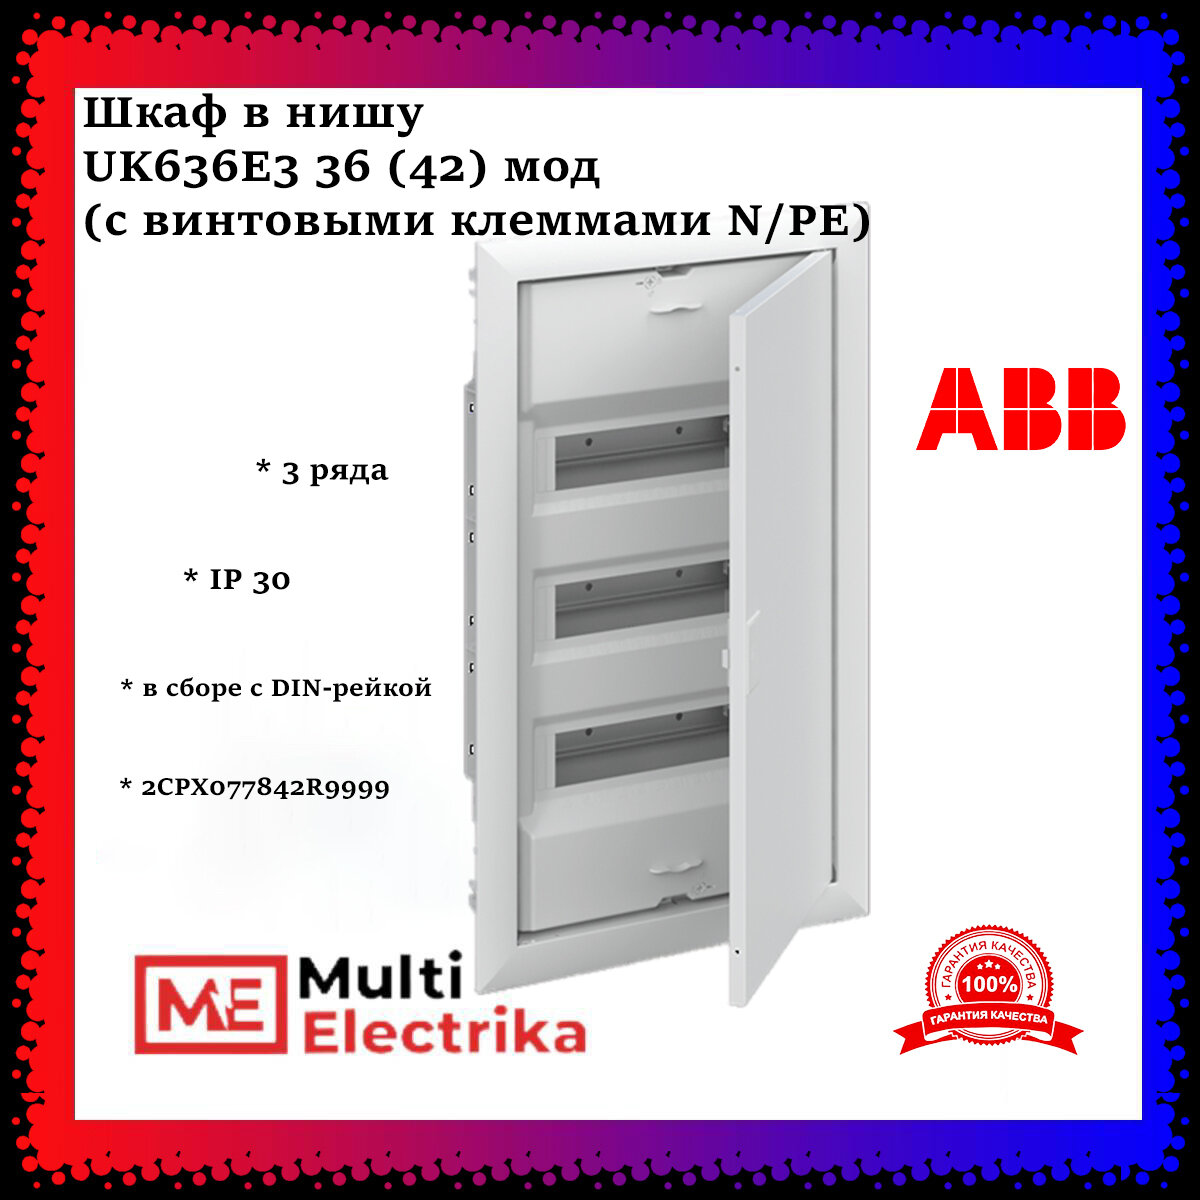 Шкаф в нишу ABB UK636E3 36 (42) мод (с винтовыми клеммами N/PE) 2CPX077842R9999, белый